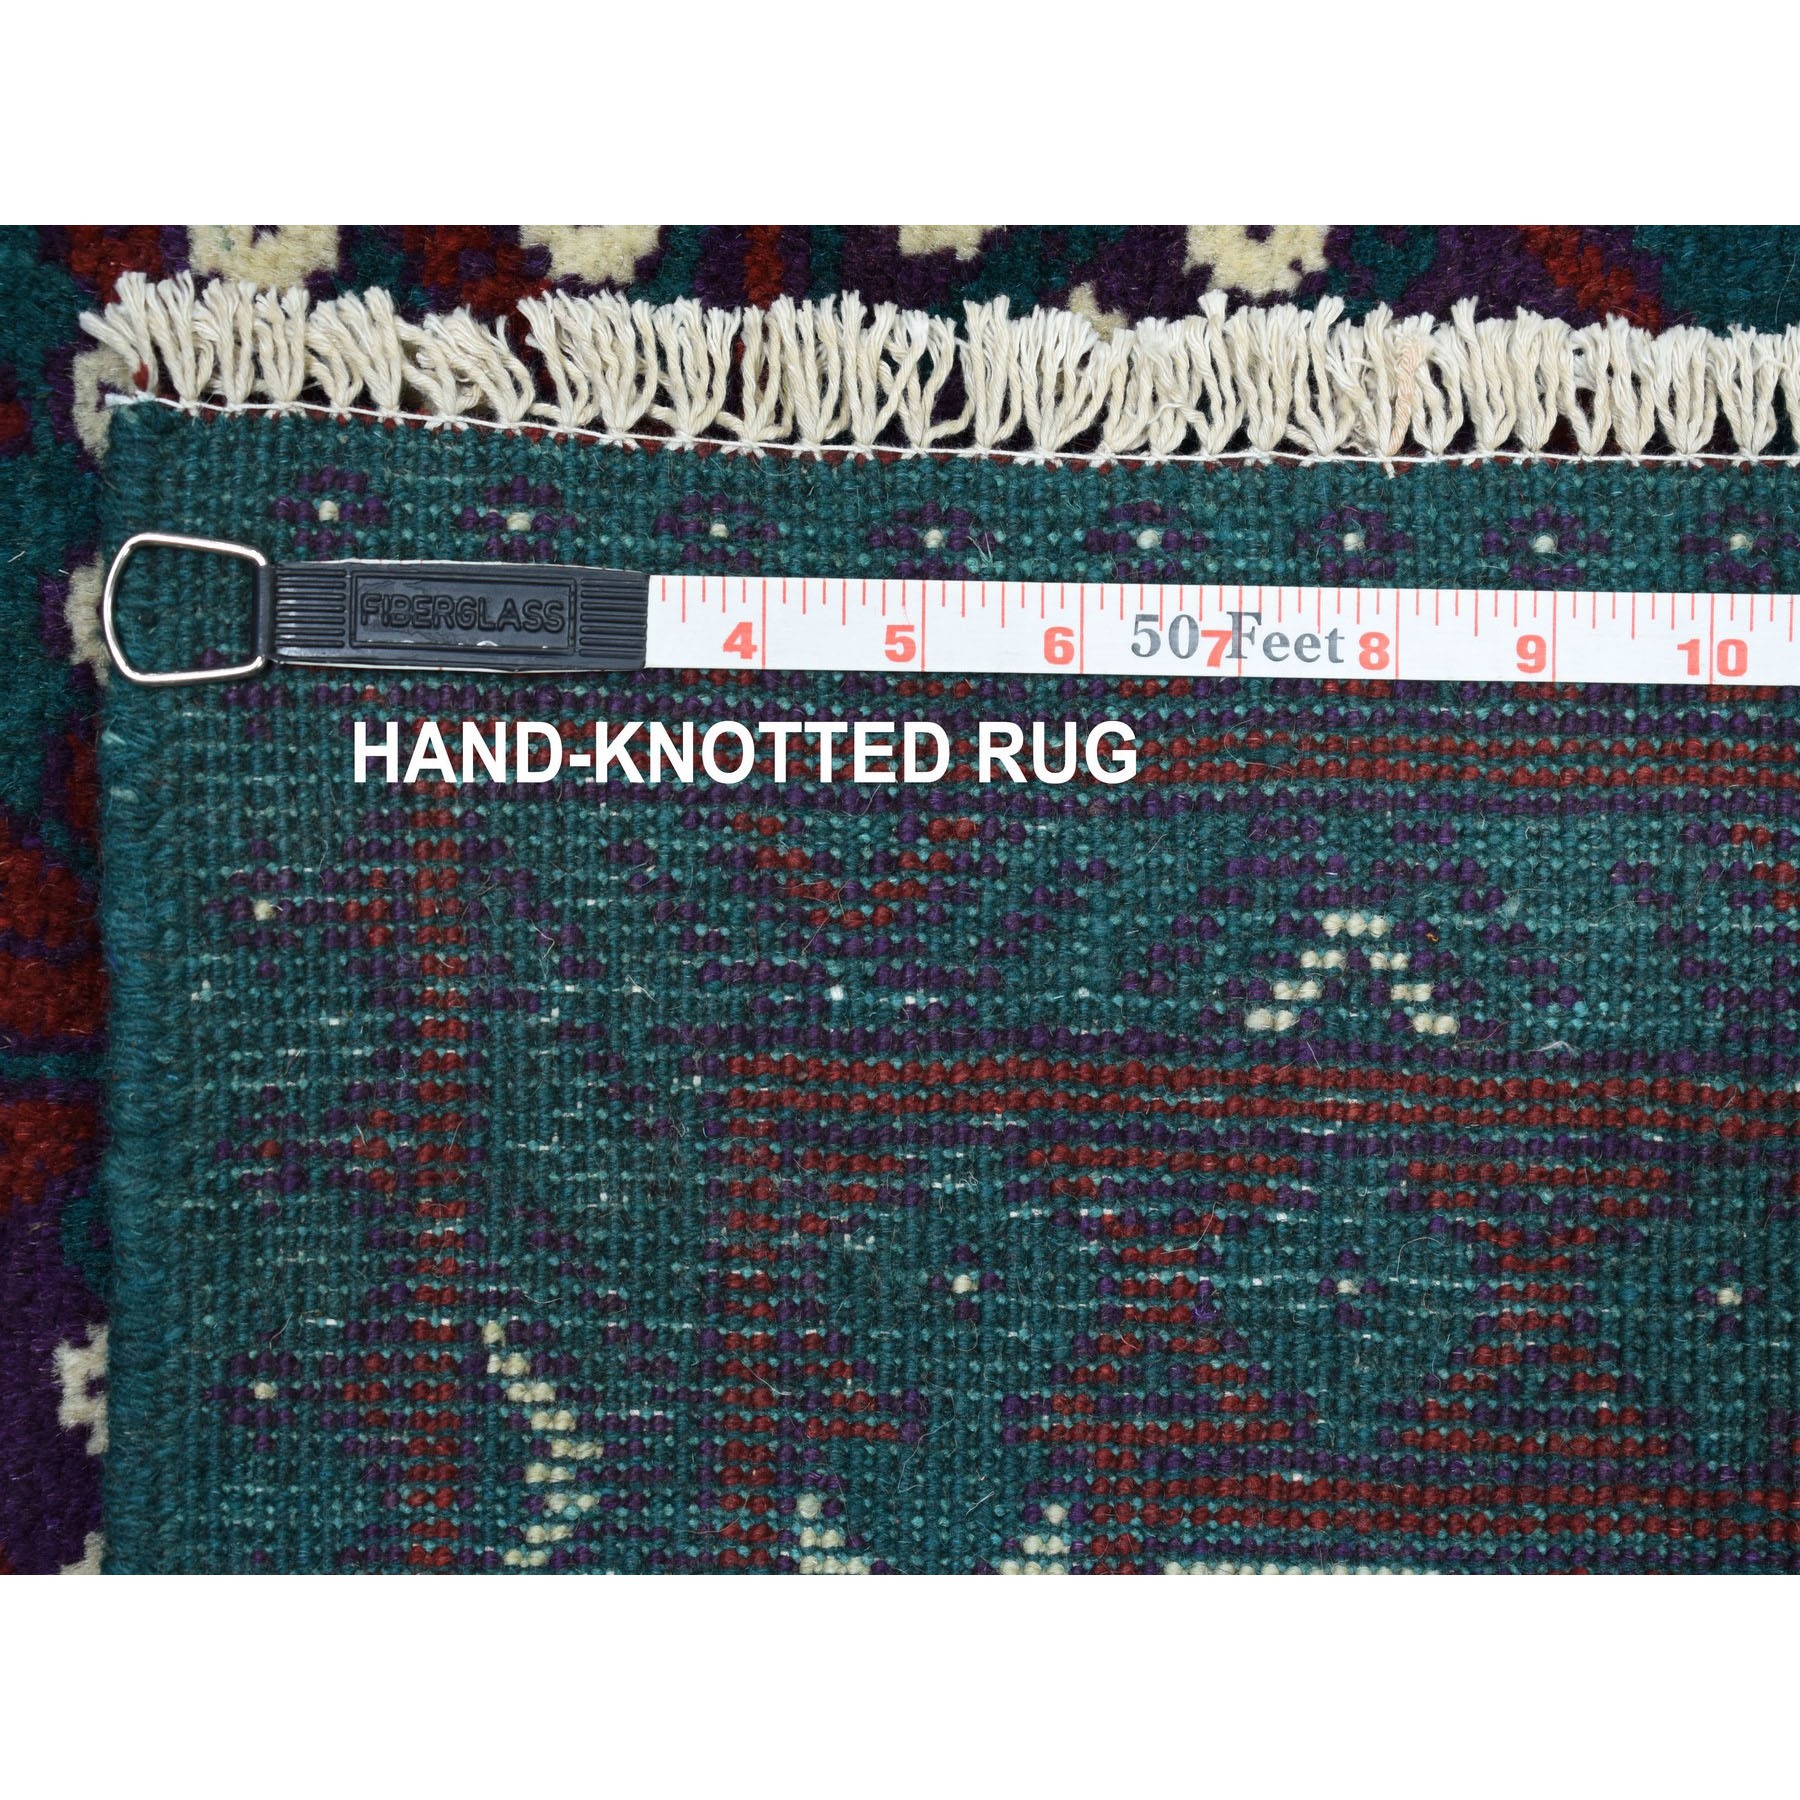 6'6"x9'4" Green Elephant Feet Design Colorful Afghan Baluch Hand Woven Pure Wool Oriental Rug 